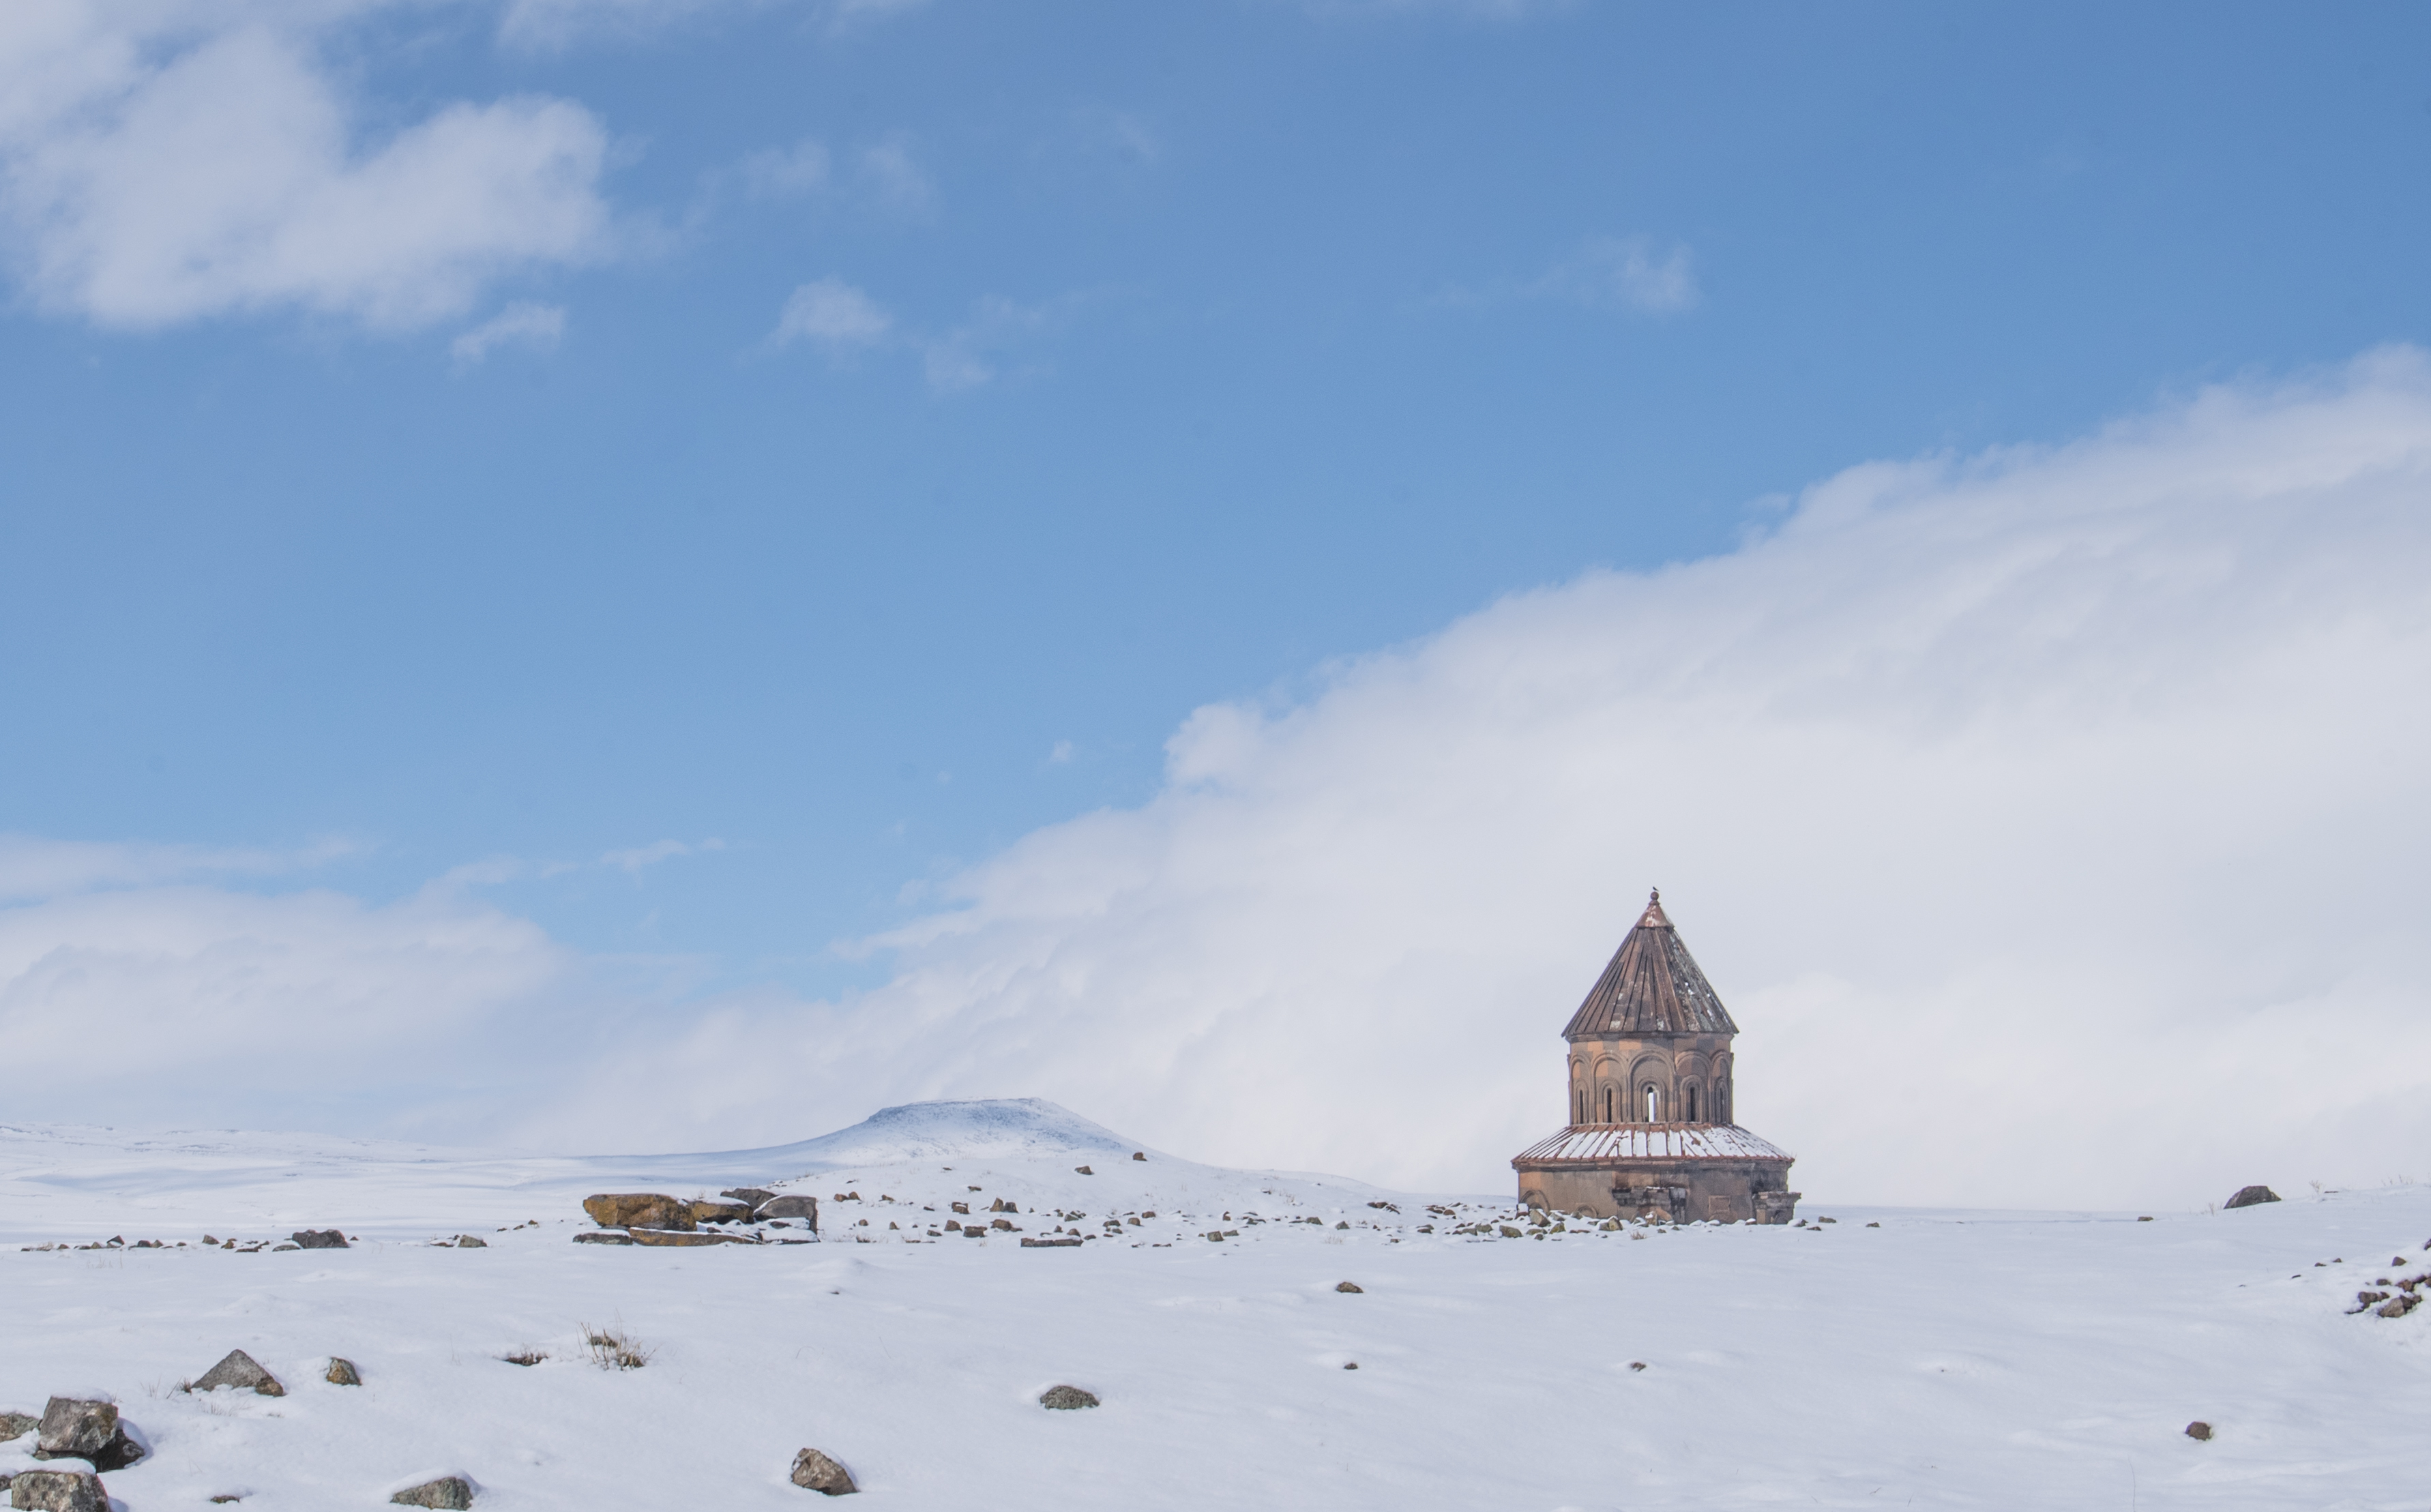 Dünya Mirası Ani Mart'ta Karla Kaplandı